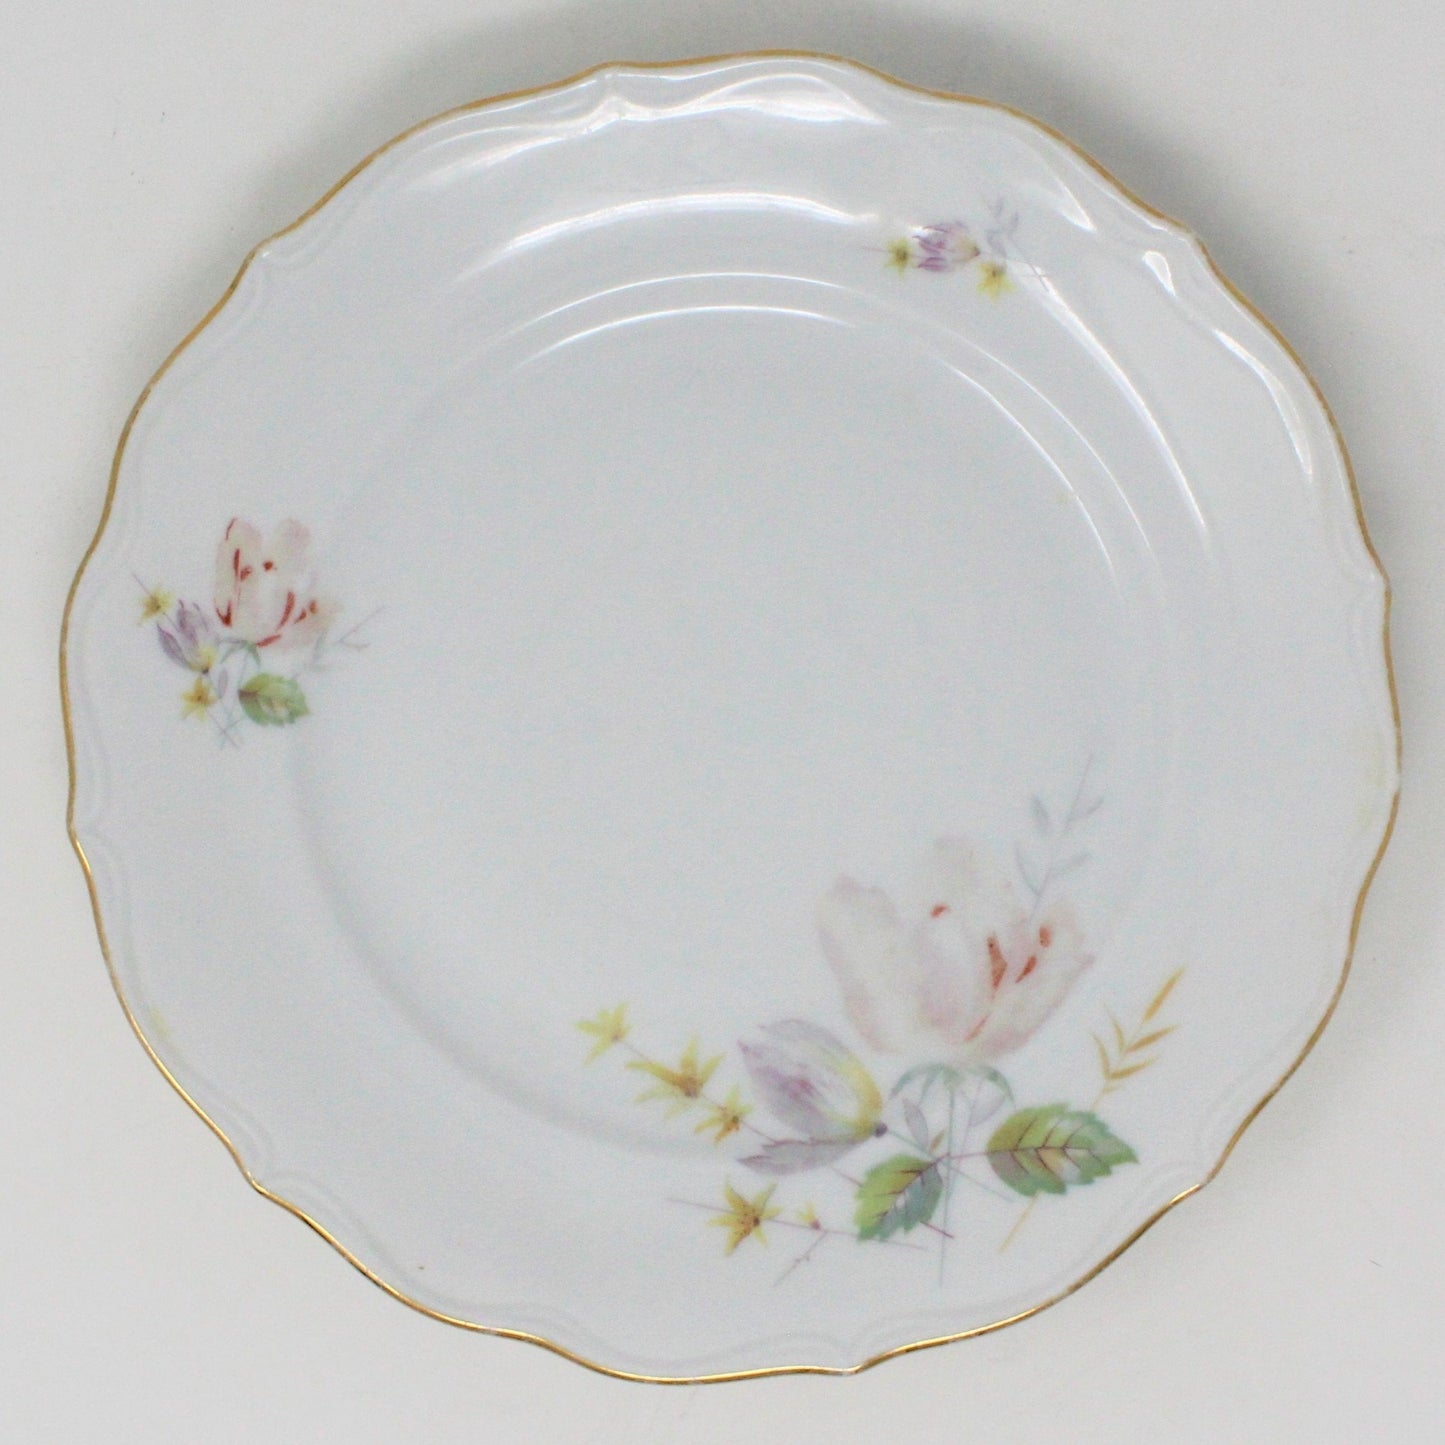 Decorative Plate, Bavaria Fredericksburg, Floral, W. Germany, Vintage